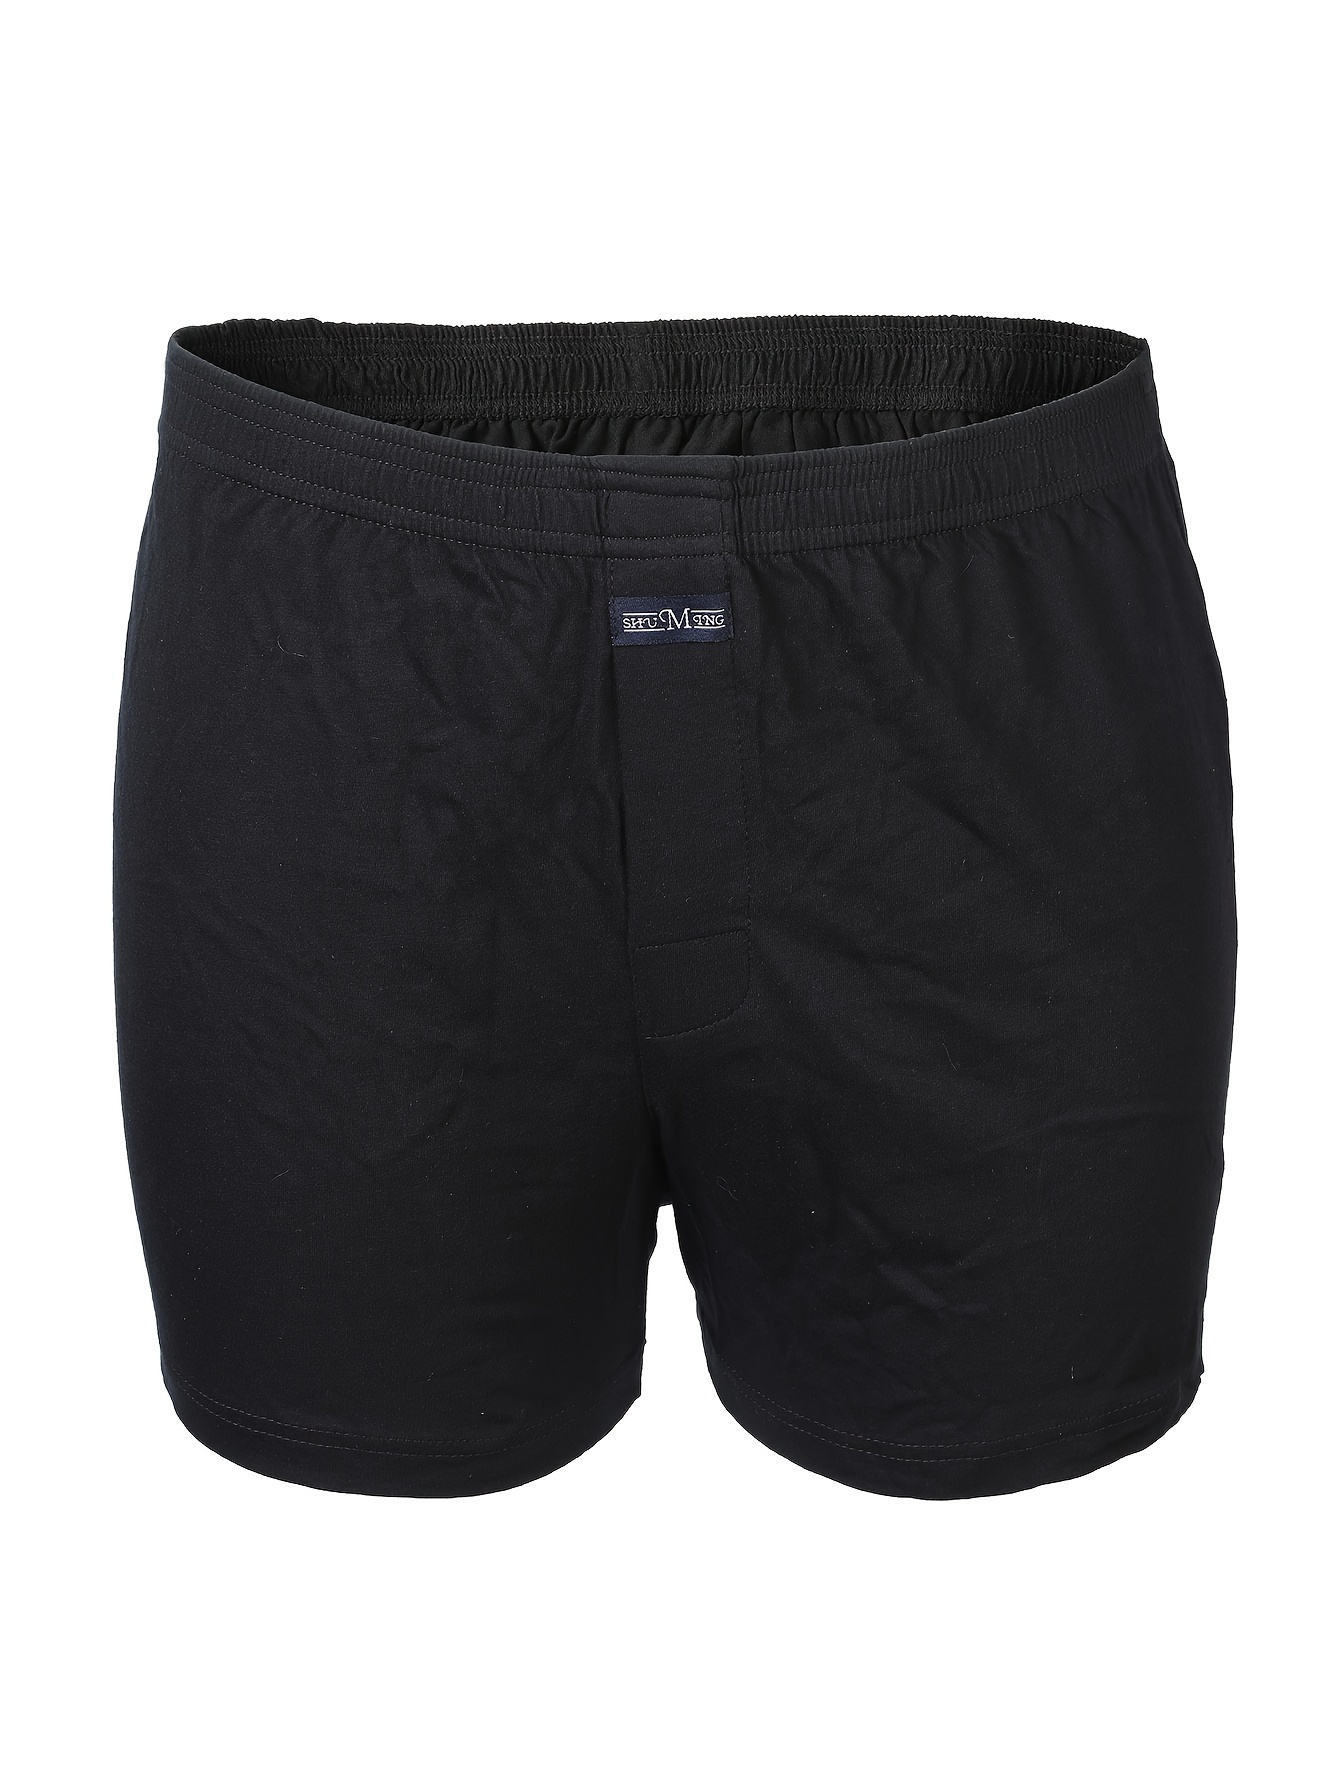 Men's Solid Black Cotton Boxers Underwear